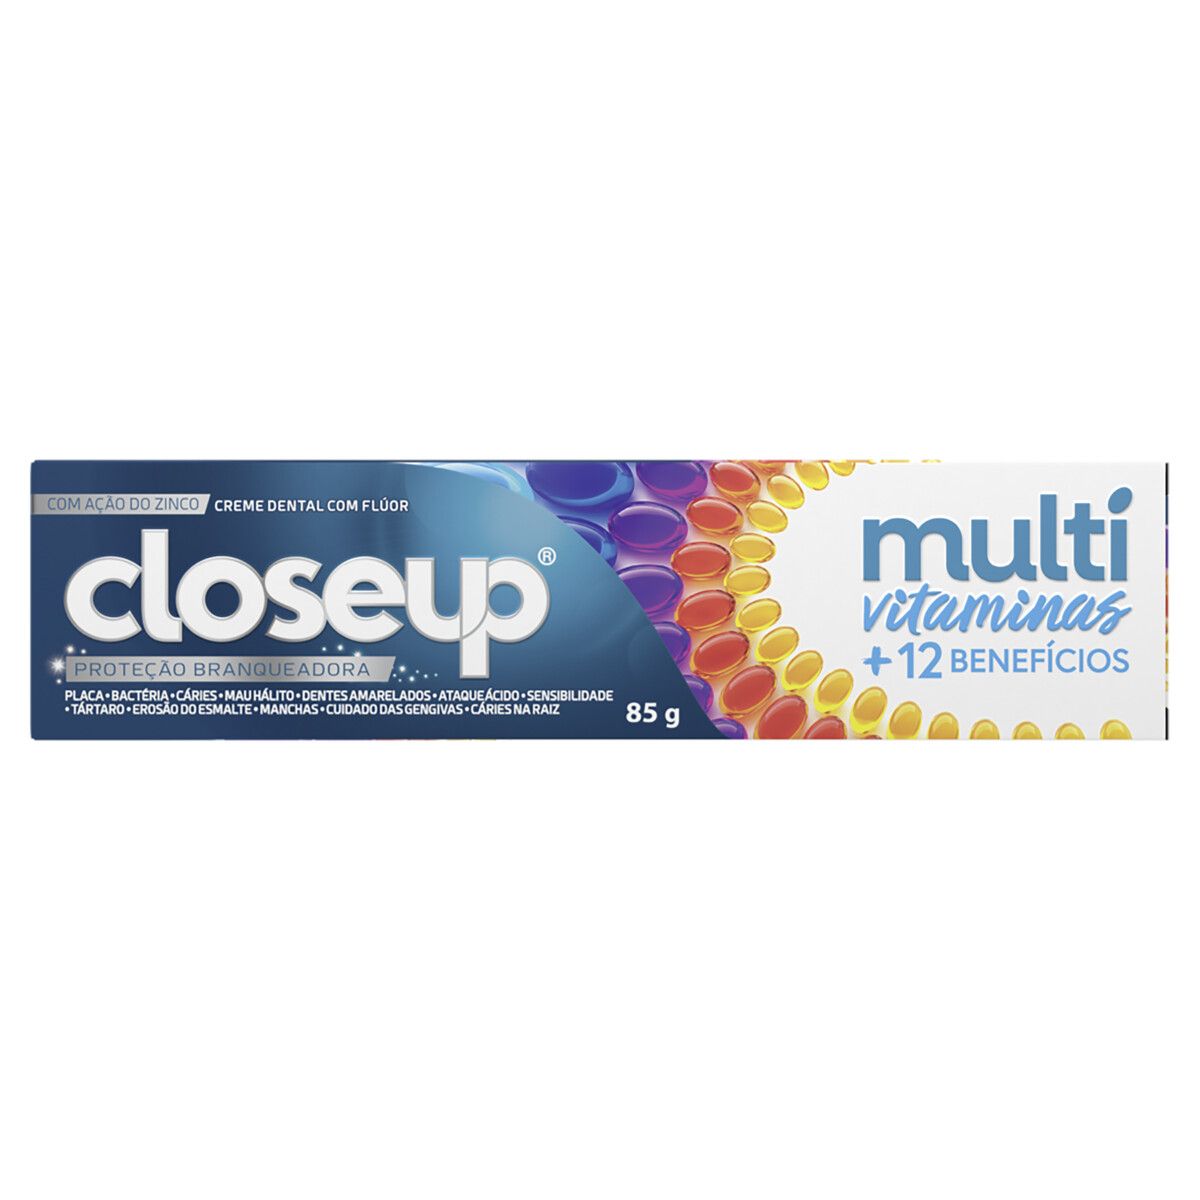 Creme Dental Closeup Multivitaminas + 12 Benefícios 85g image number 2